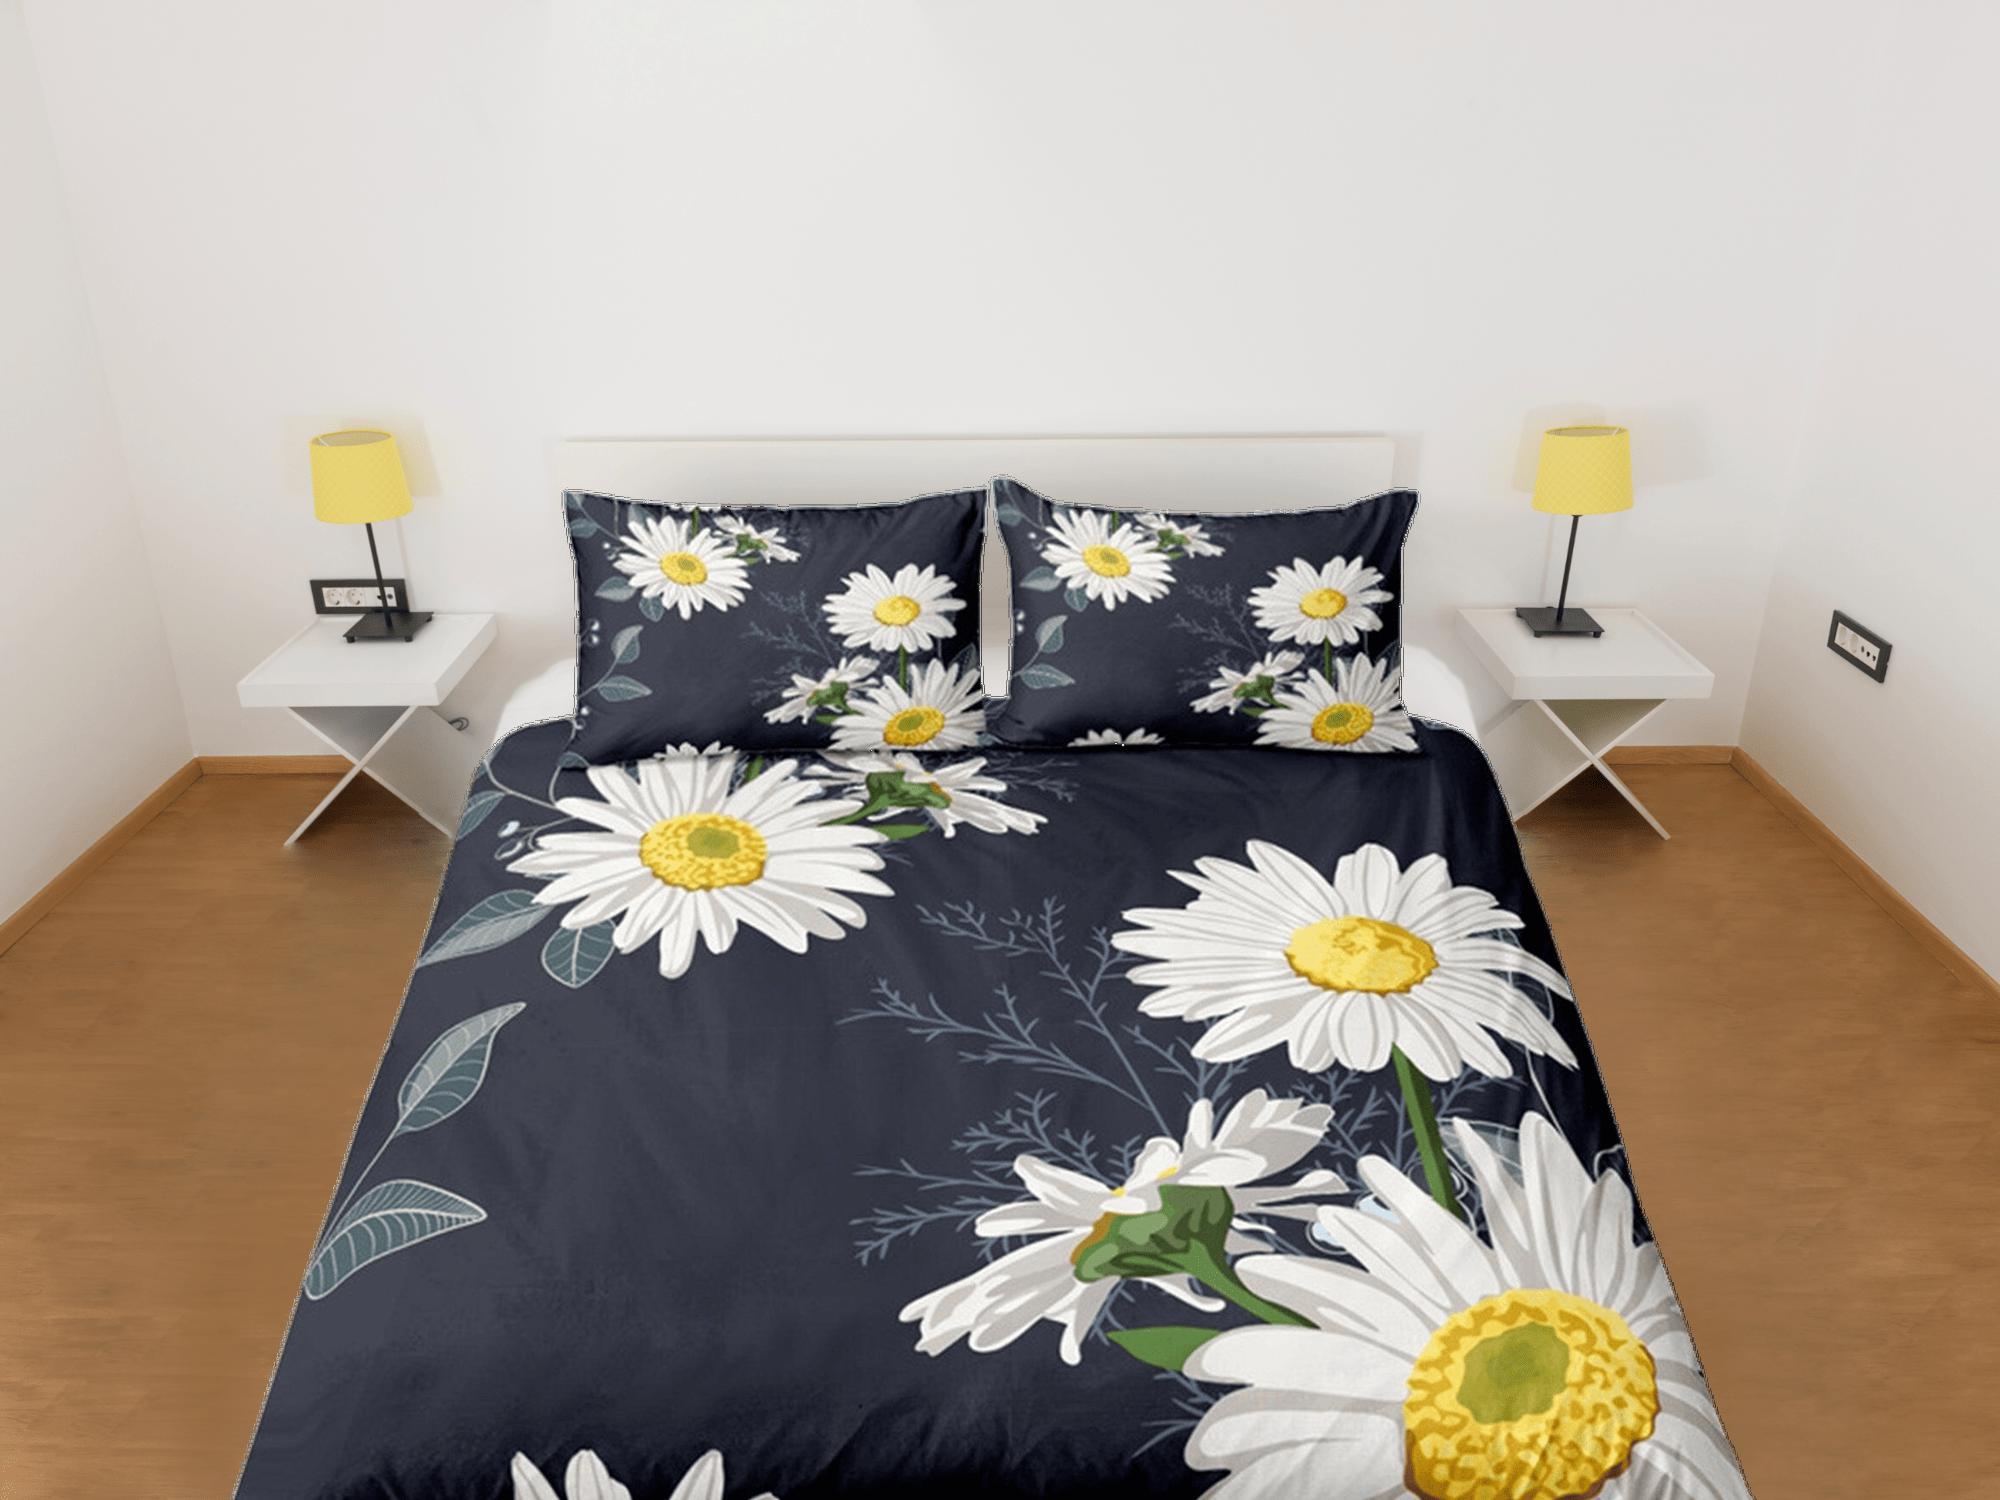 daintyduvet Floral Black Duvet Cover Set, White Daisy Bedspread Dorm Bedding Set Bedding Single